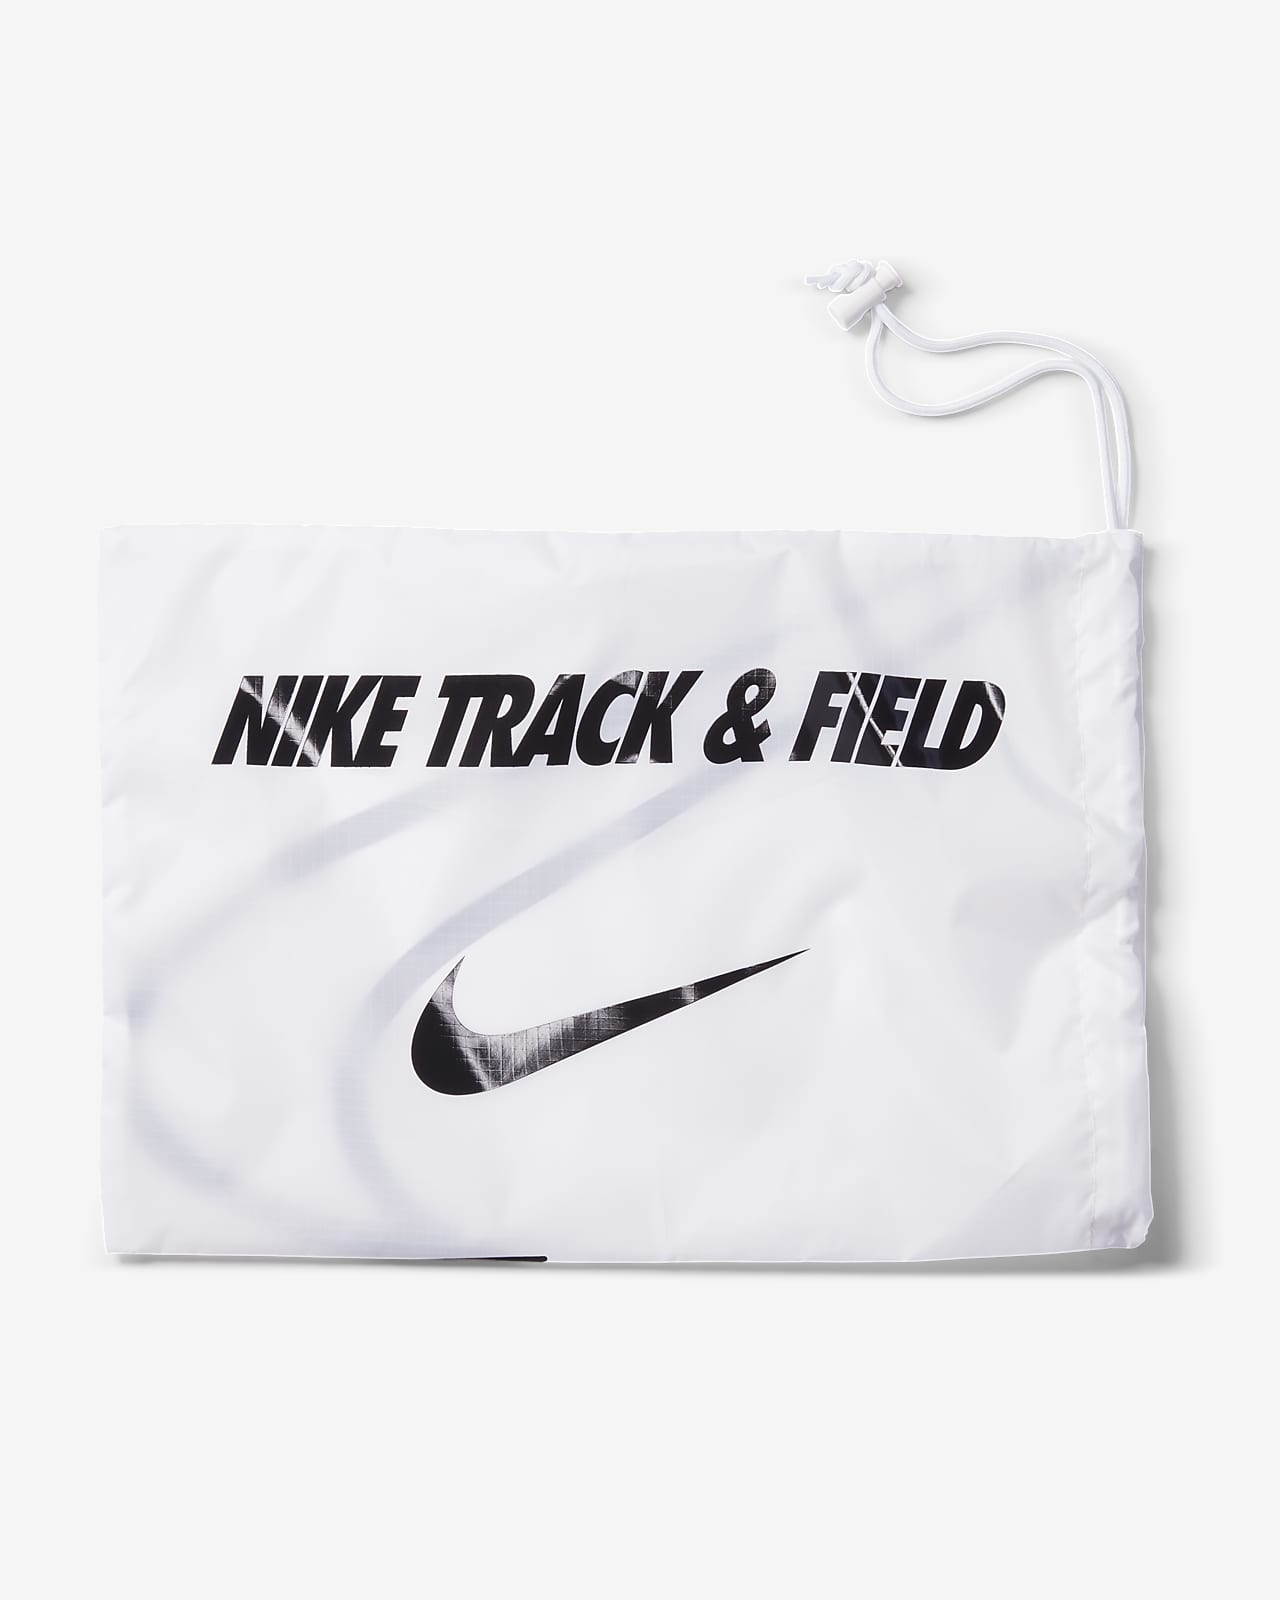 track & field nike